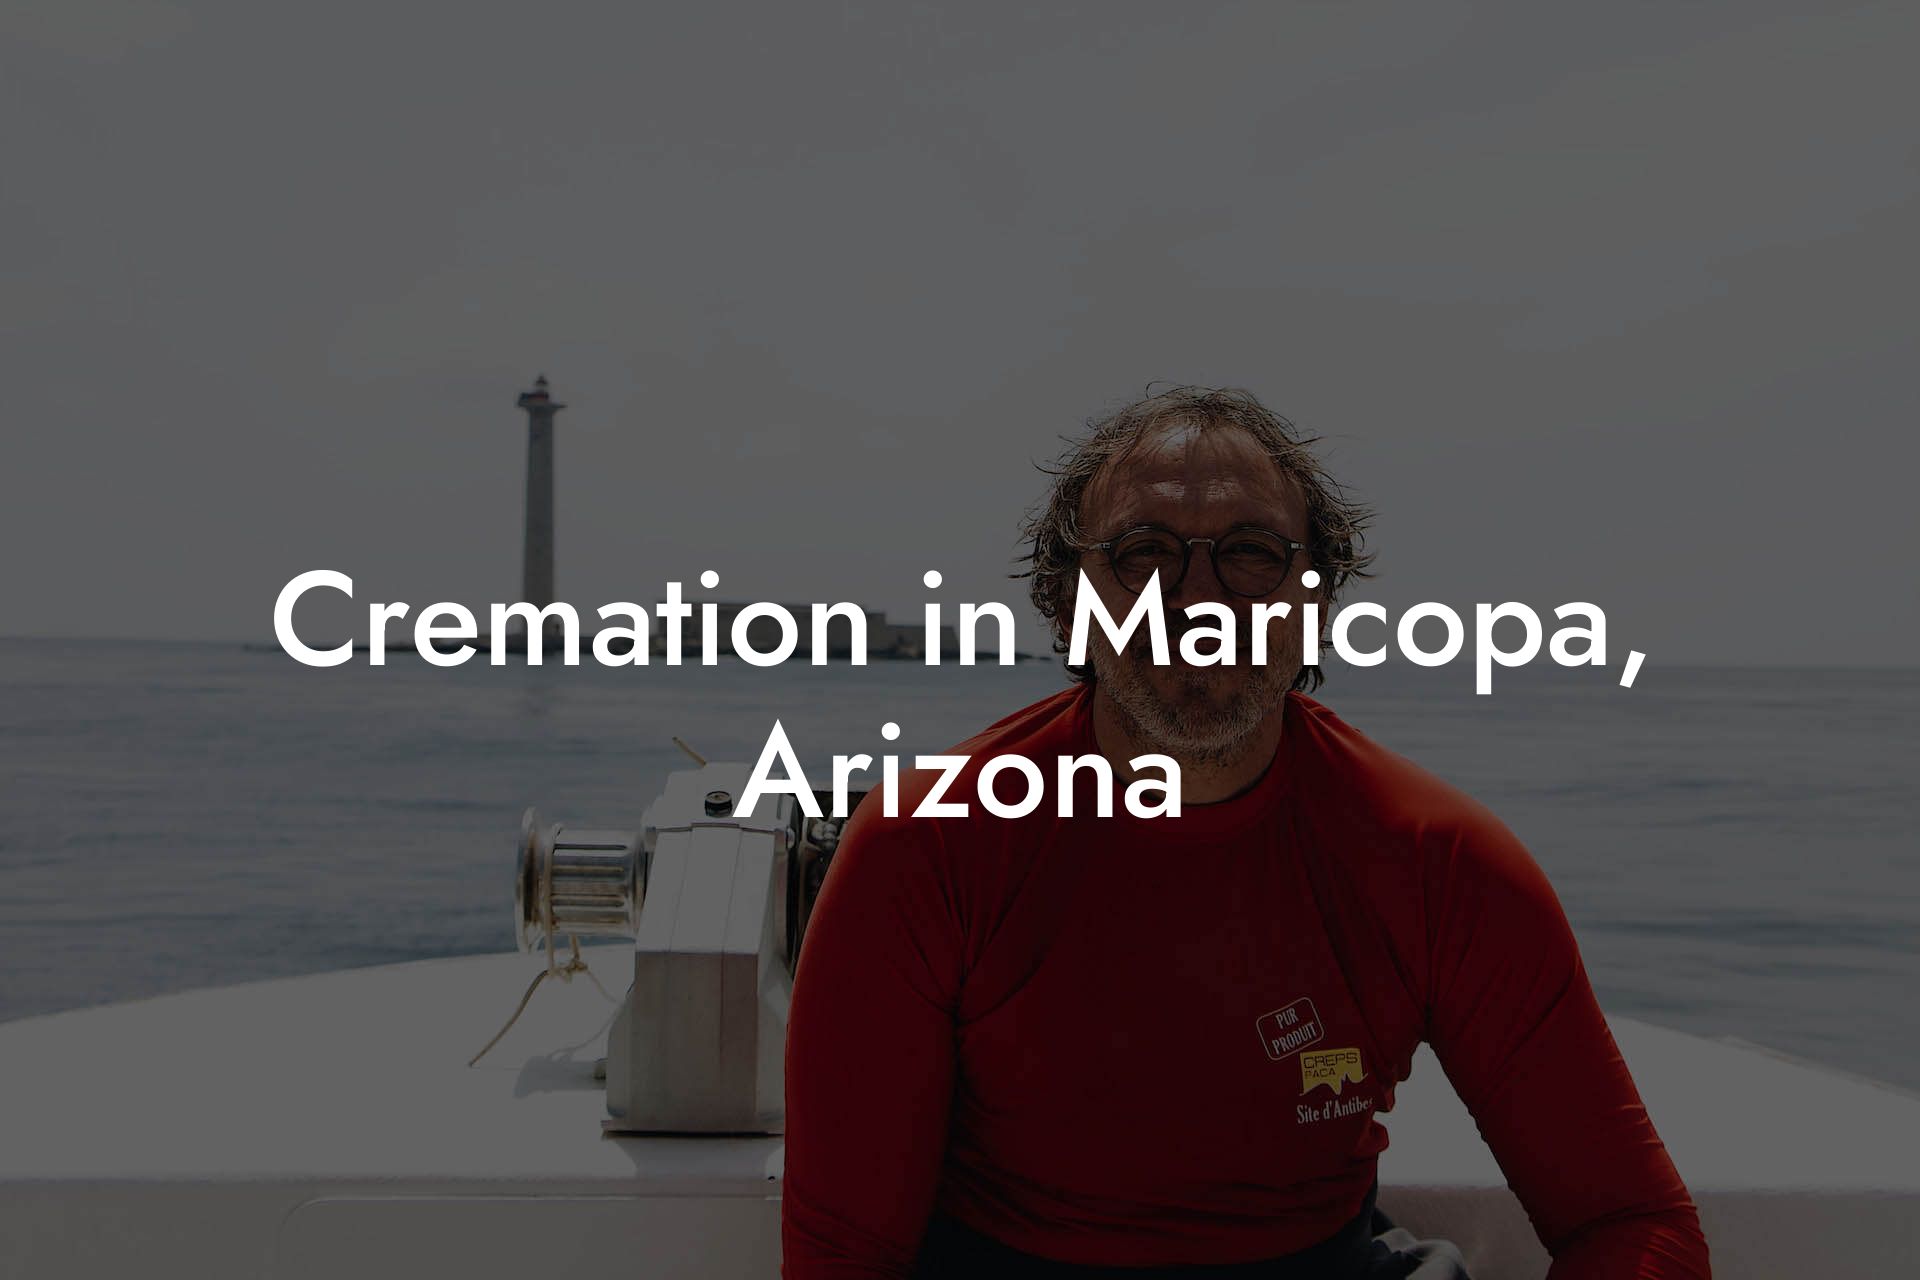 Cremation in Maricopa, Arizona